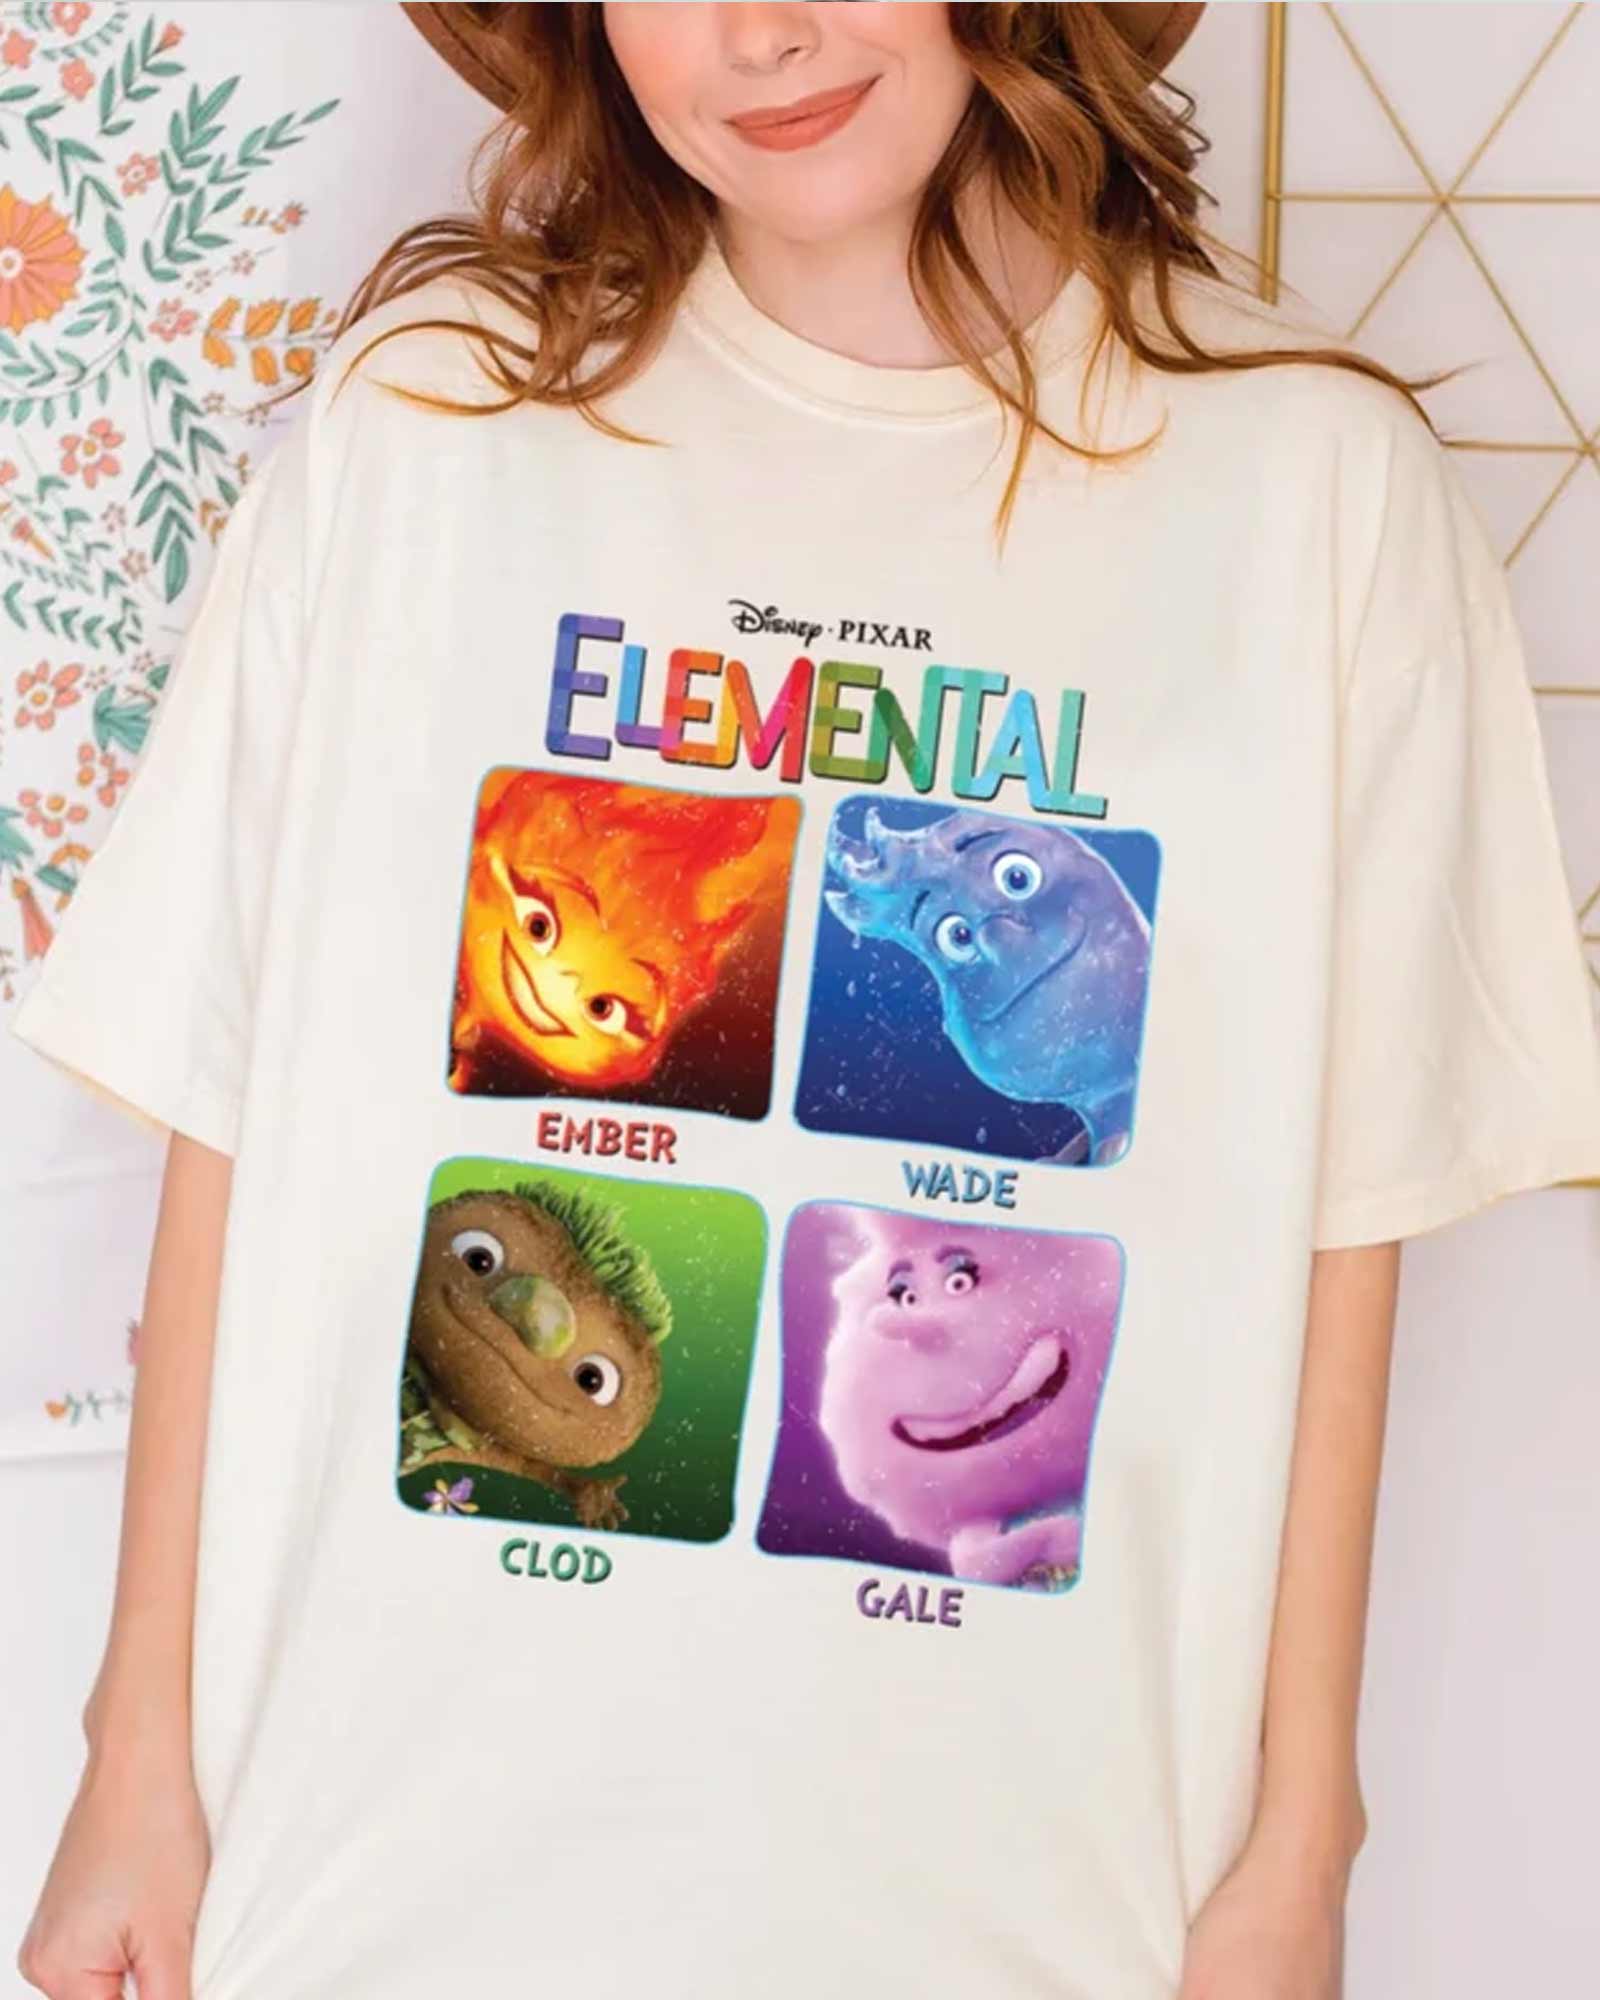 Clod Pixar Elemental Halloween Costume Shirt